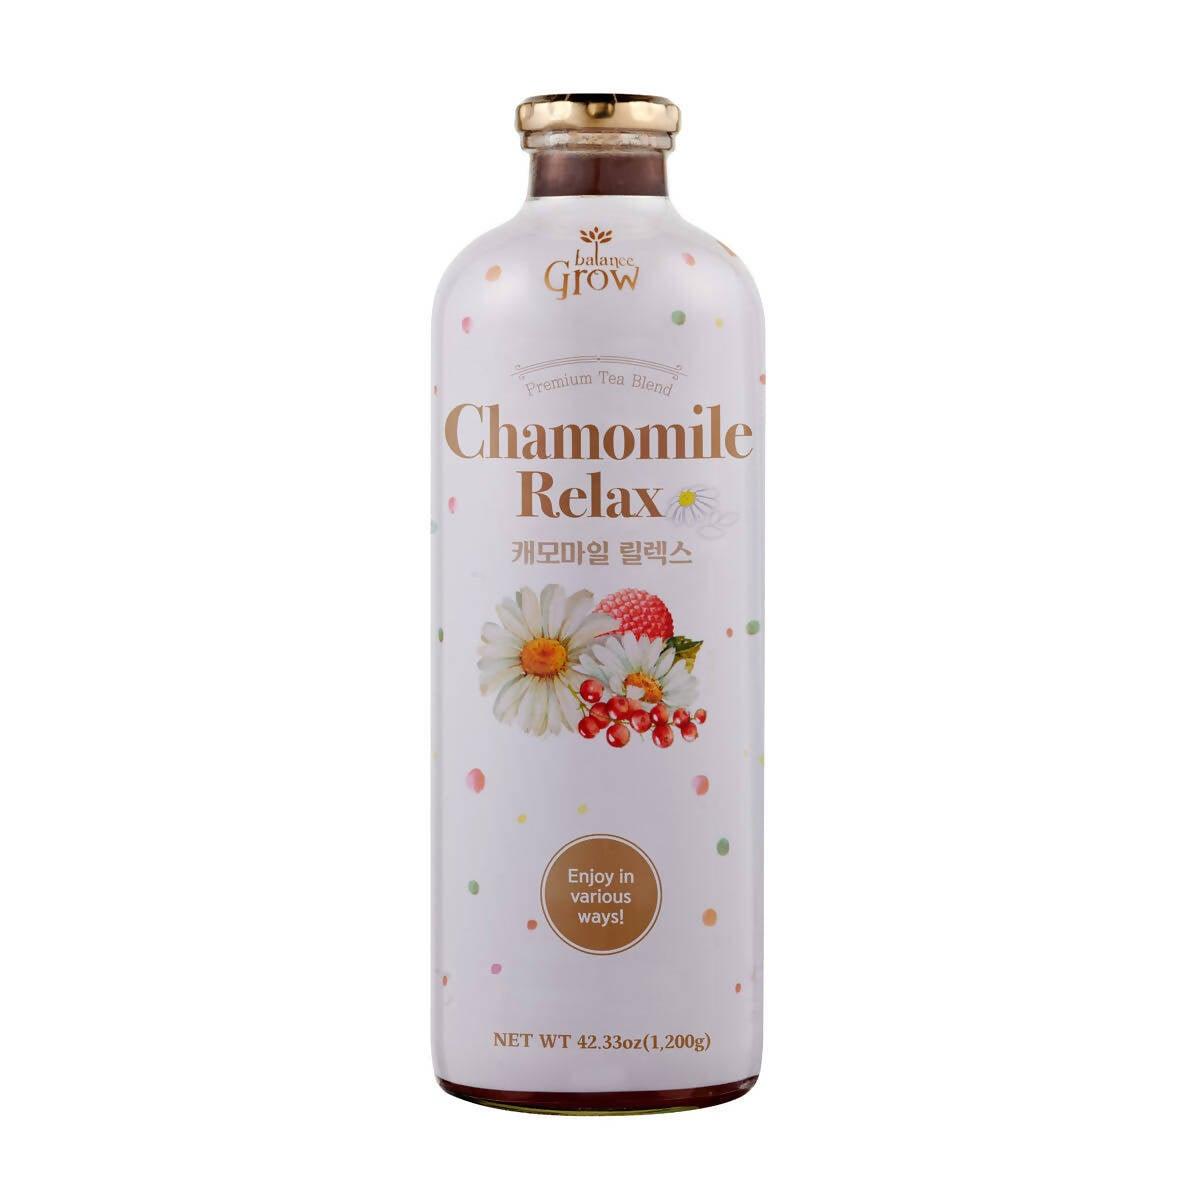 Balance Grow Chamomile Relax Premium Tea Blend, 1L Tea & Coffee Costco UK   